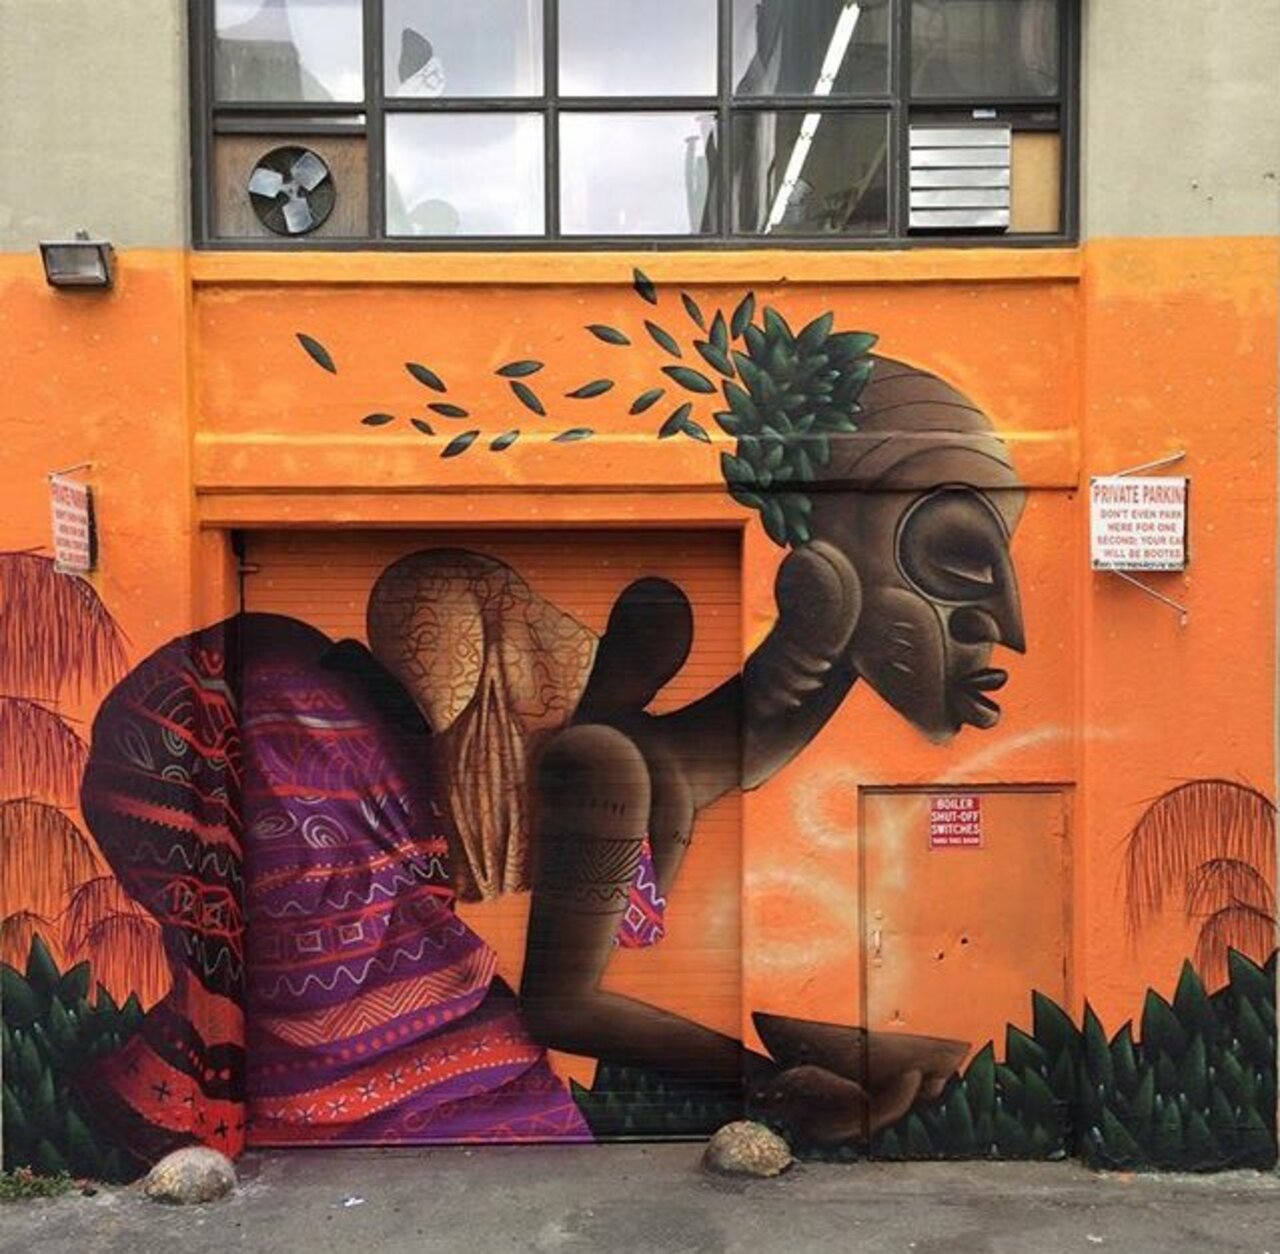 New Street Art by Alexandre Keto in NYC 

#art #graffiti #mural #streetart https://t.co/mkuaYxk0f5